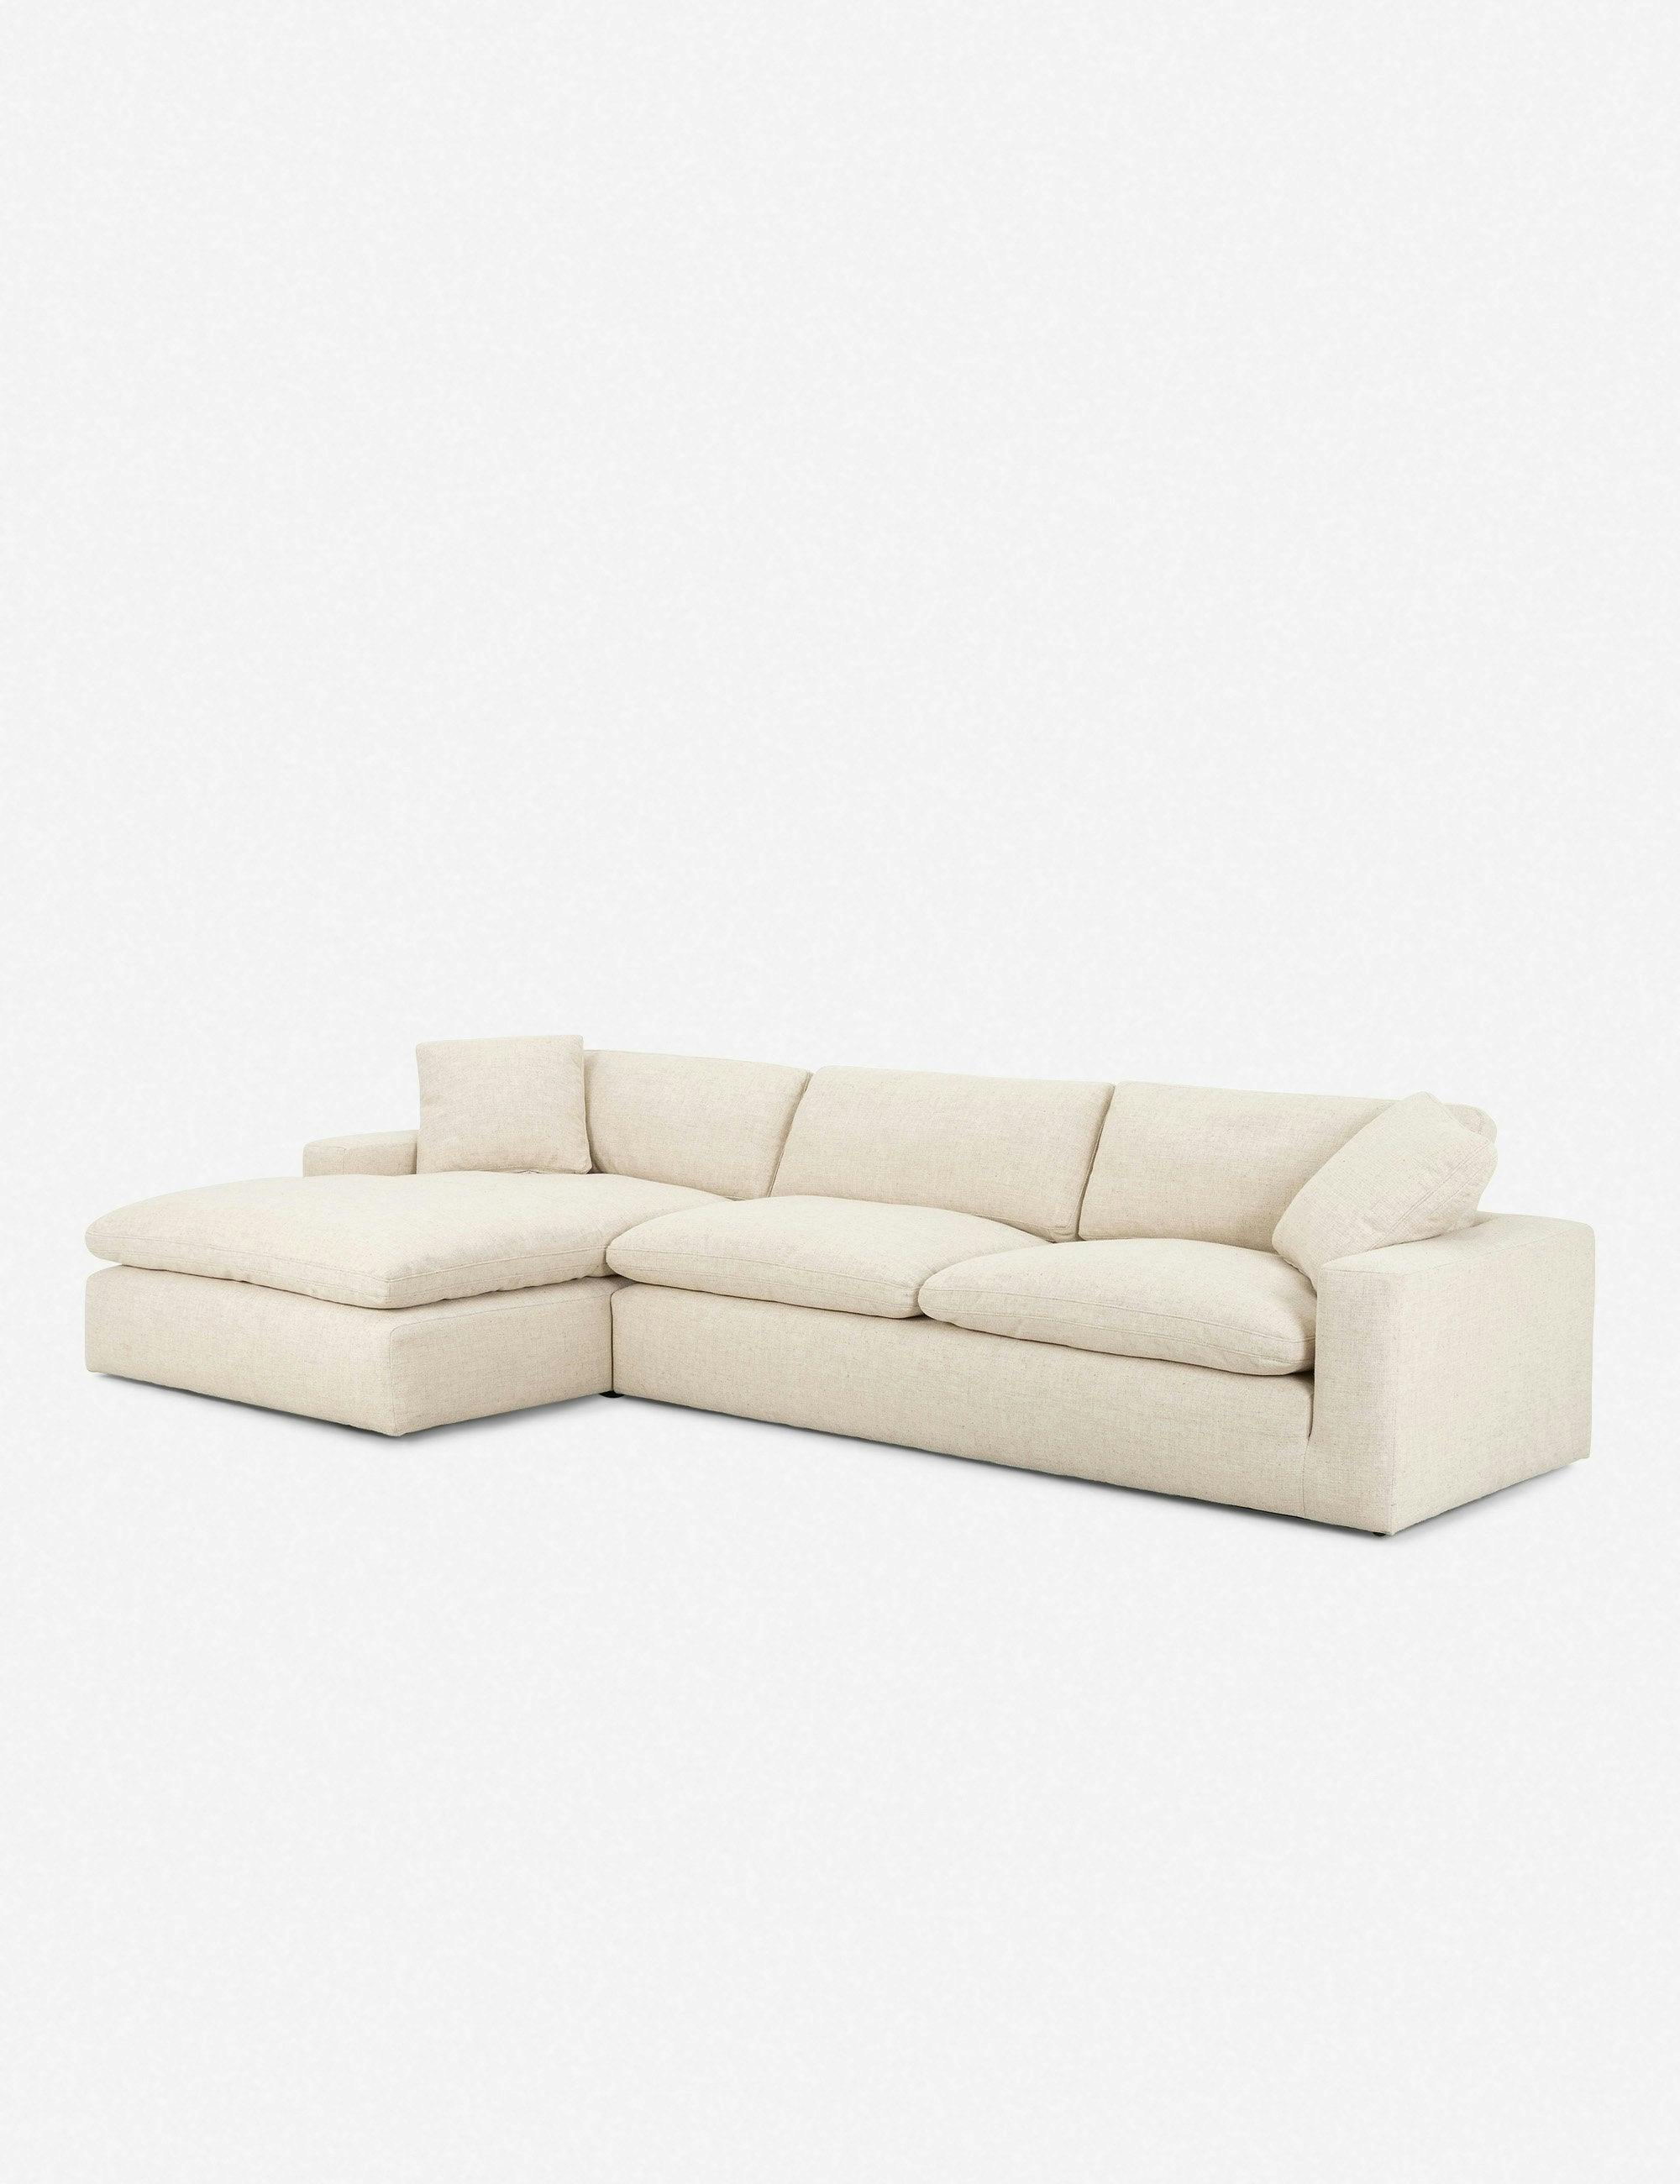 Rita 137"W Cream Left-Facing 2-Piece Sectional Sofa